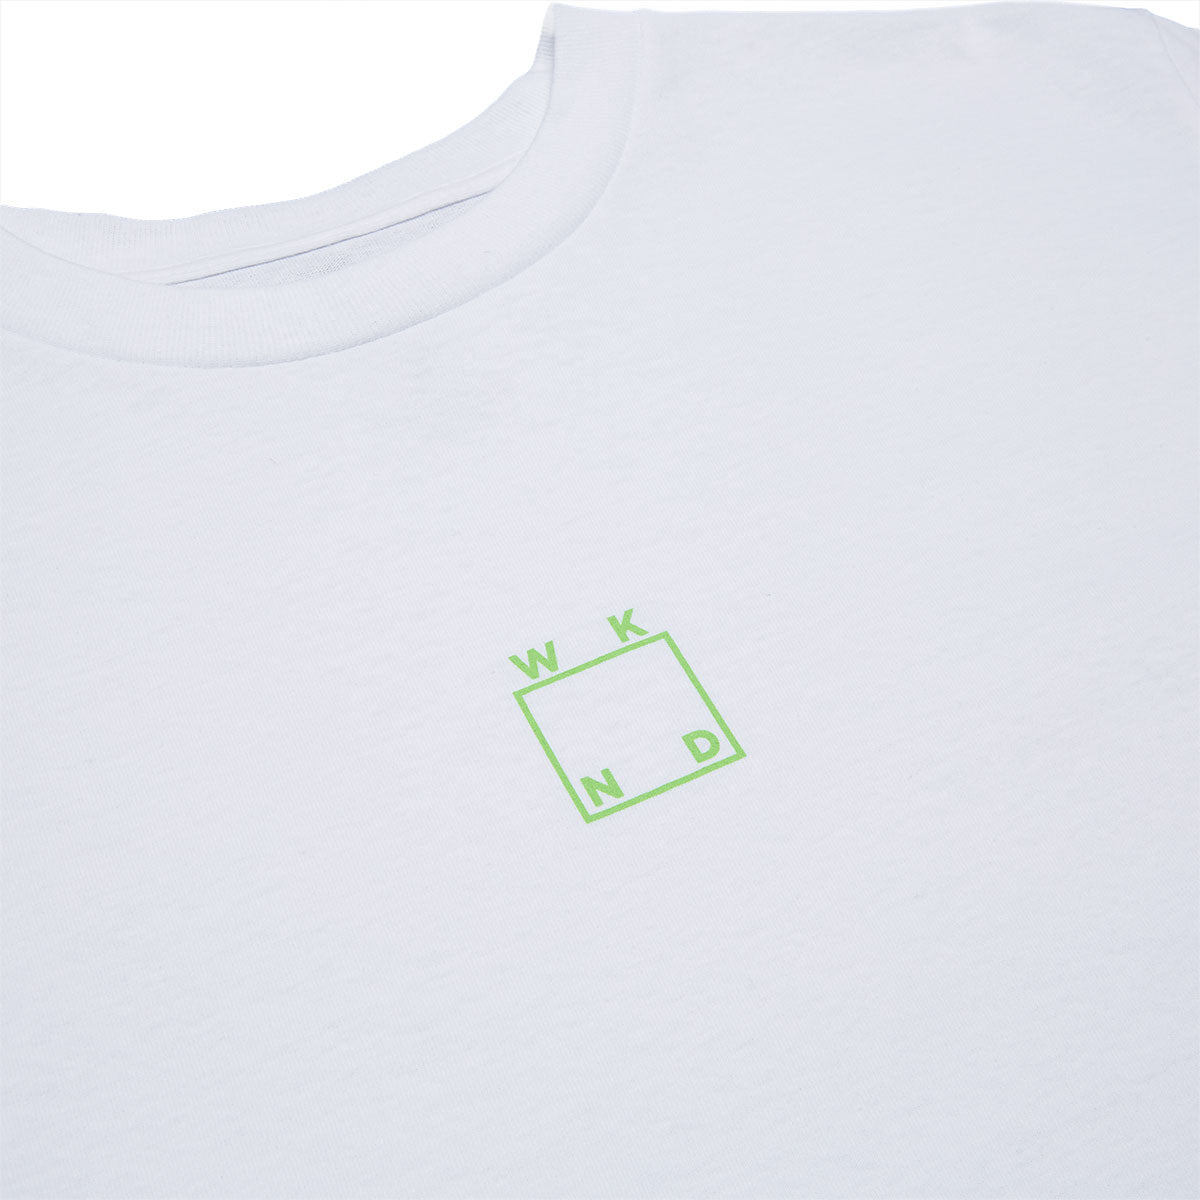 WKND Center Logo T-Shirt - White image 2